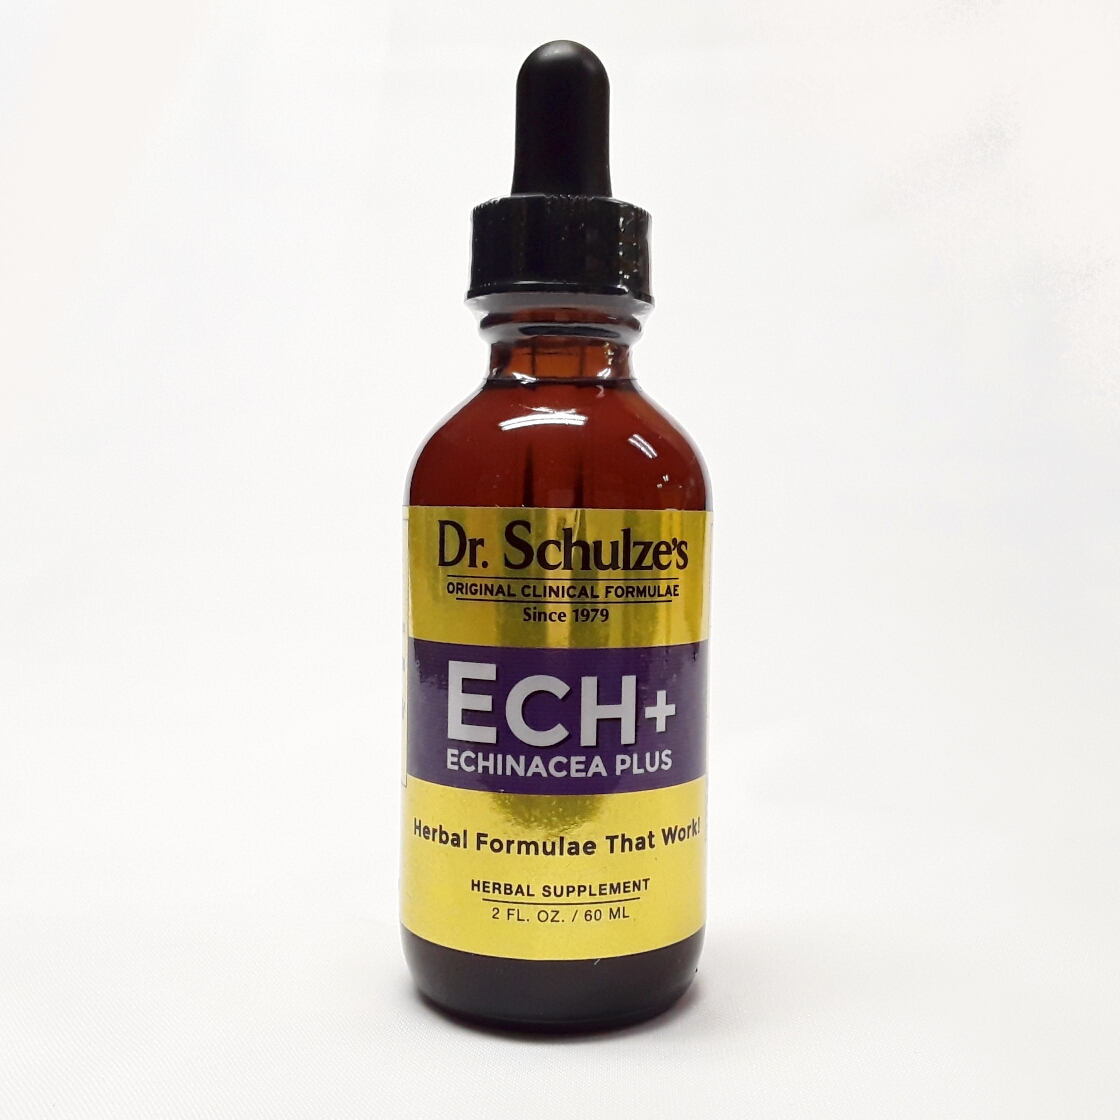 Dr Schulzes Echinacea Plus Formula Website Product Image View 1